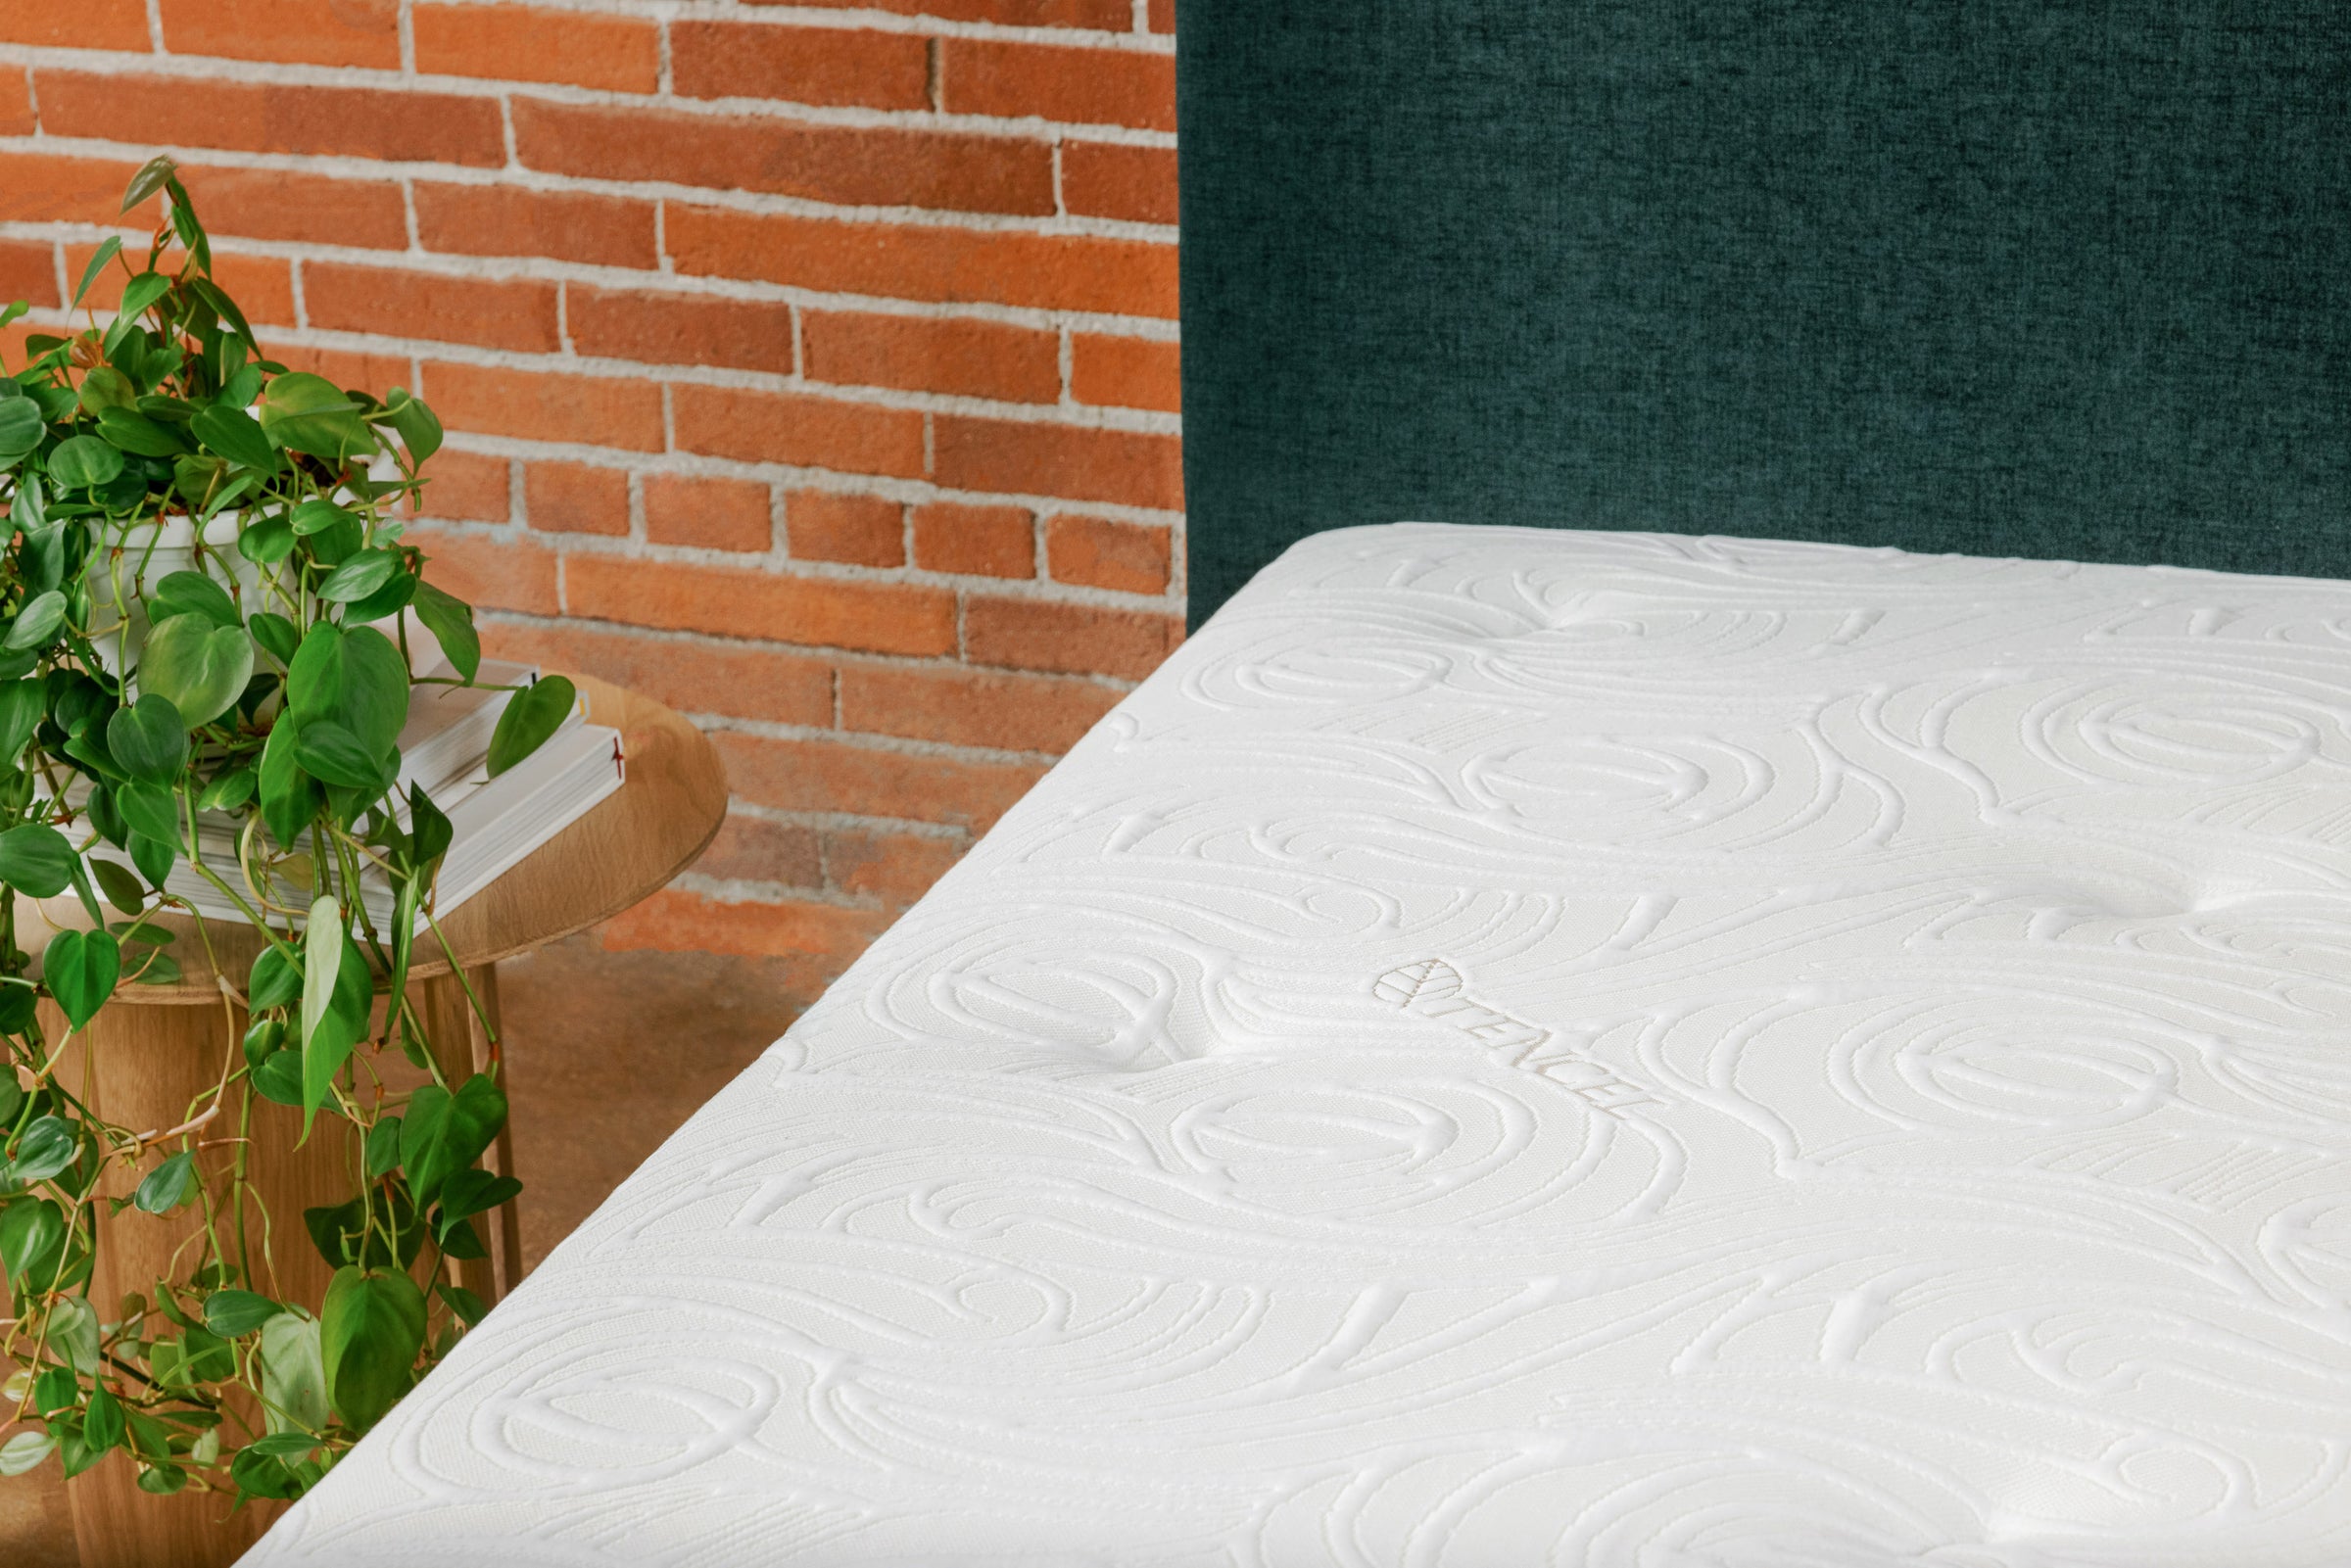 Natural hybrid mattress with natural latex and spring.